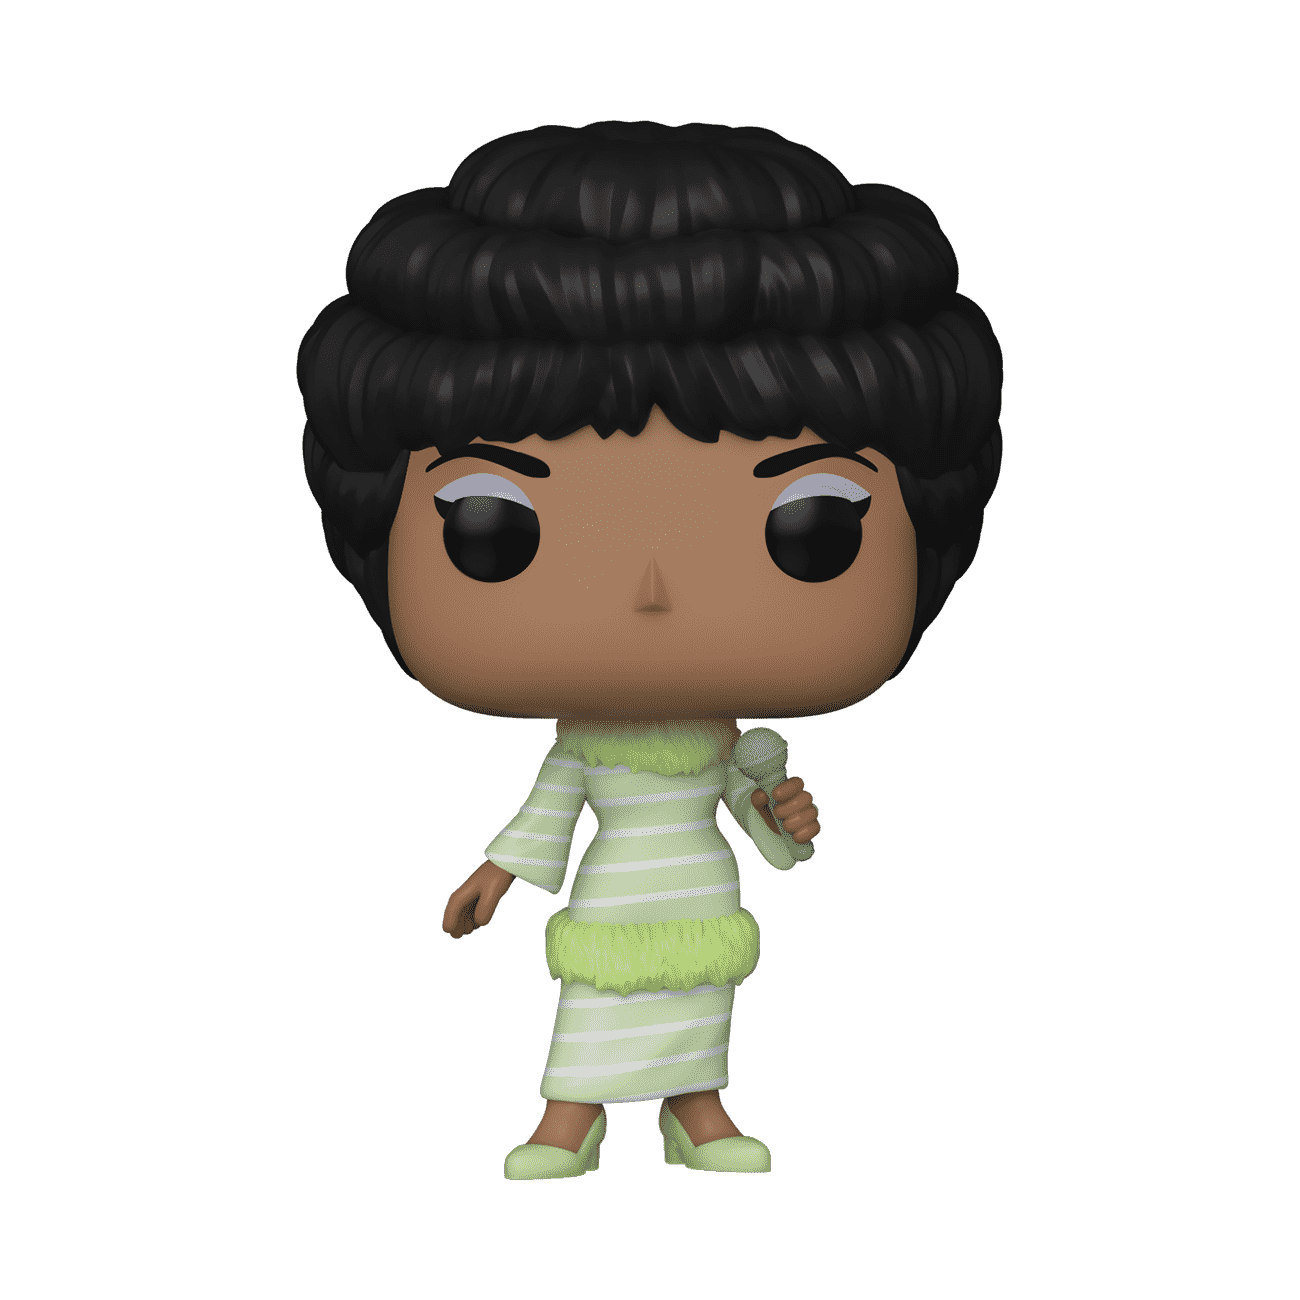 Buy Pop! Aretha Franklin in Green Dress at Funko.